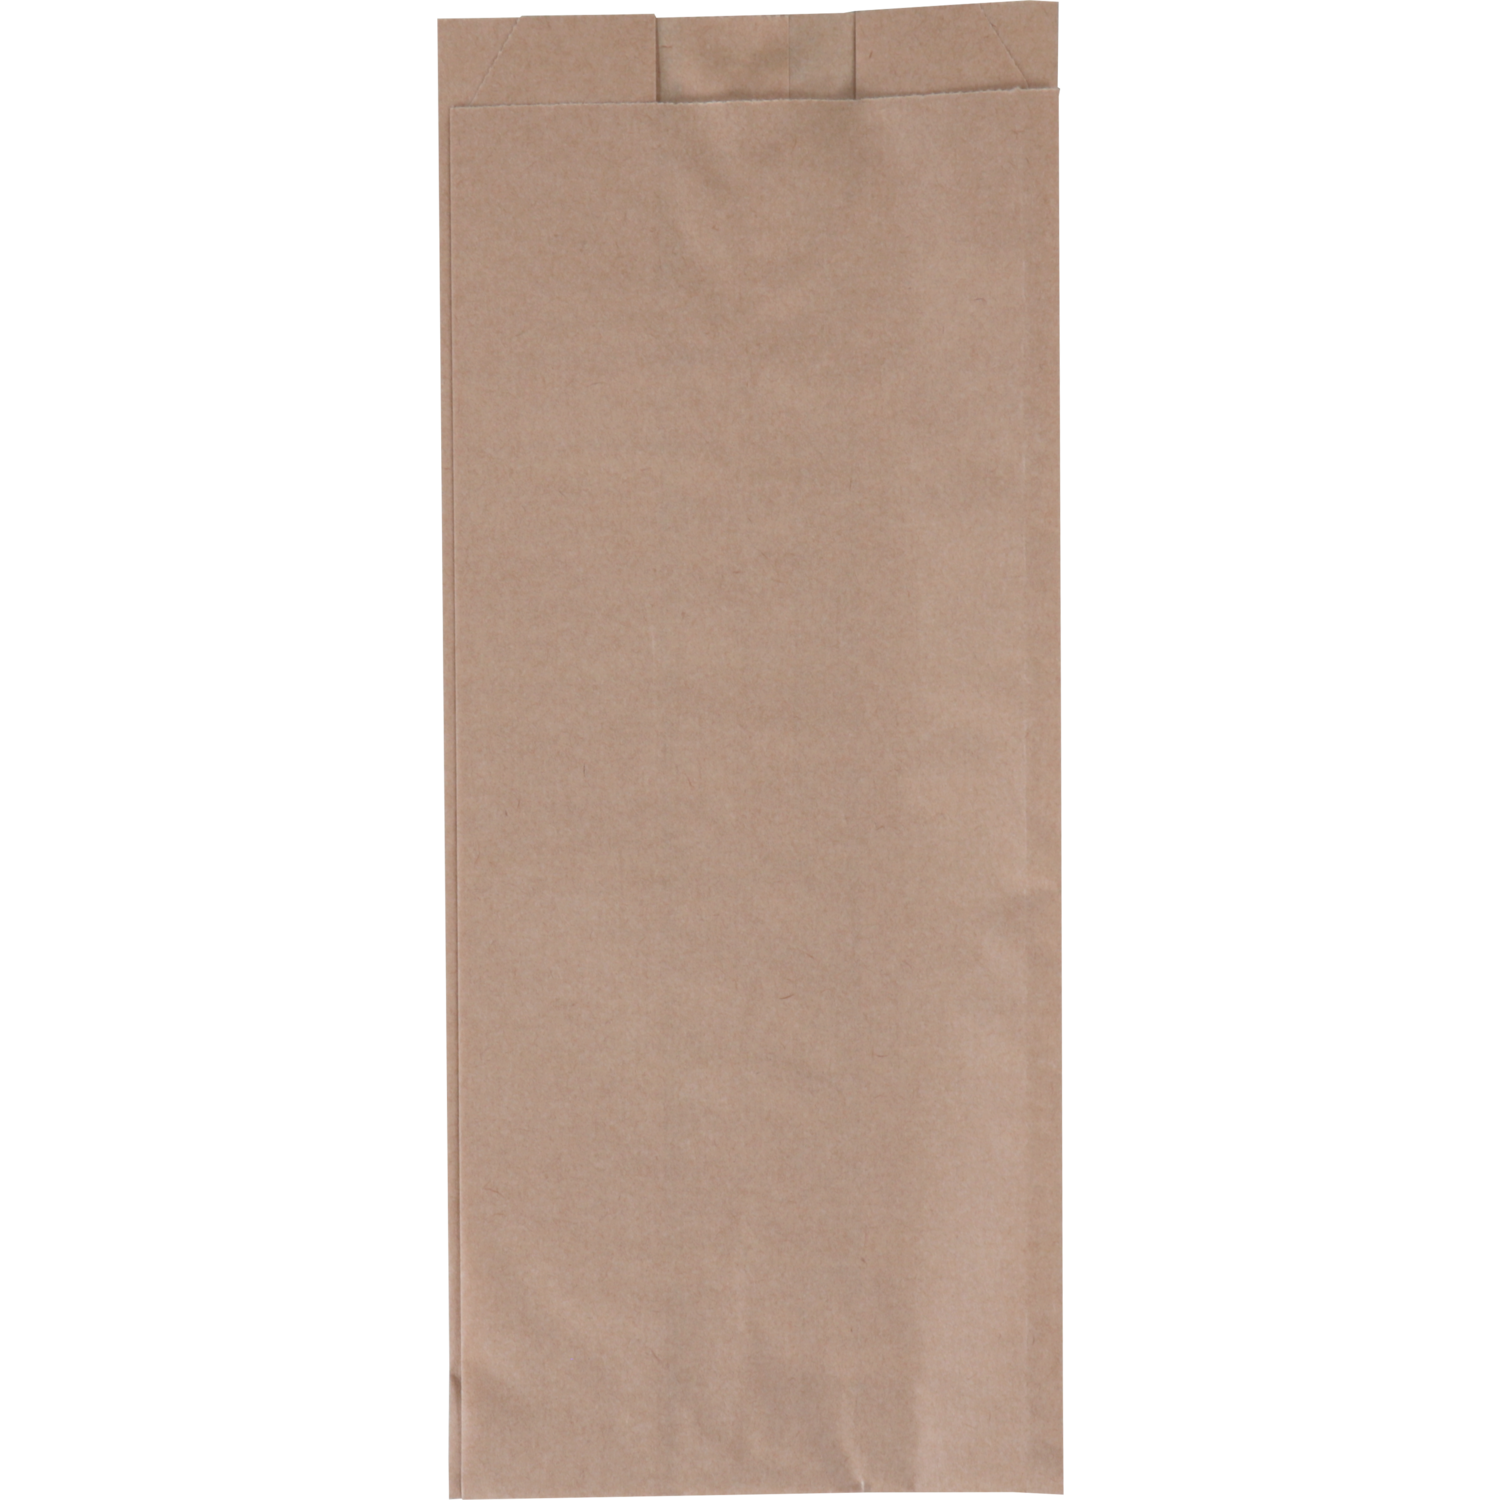 Bag, Snack bag, Ersatz paper, No. 23, 96/ 65x238mm, brown  1